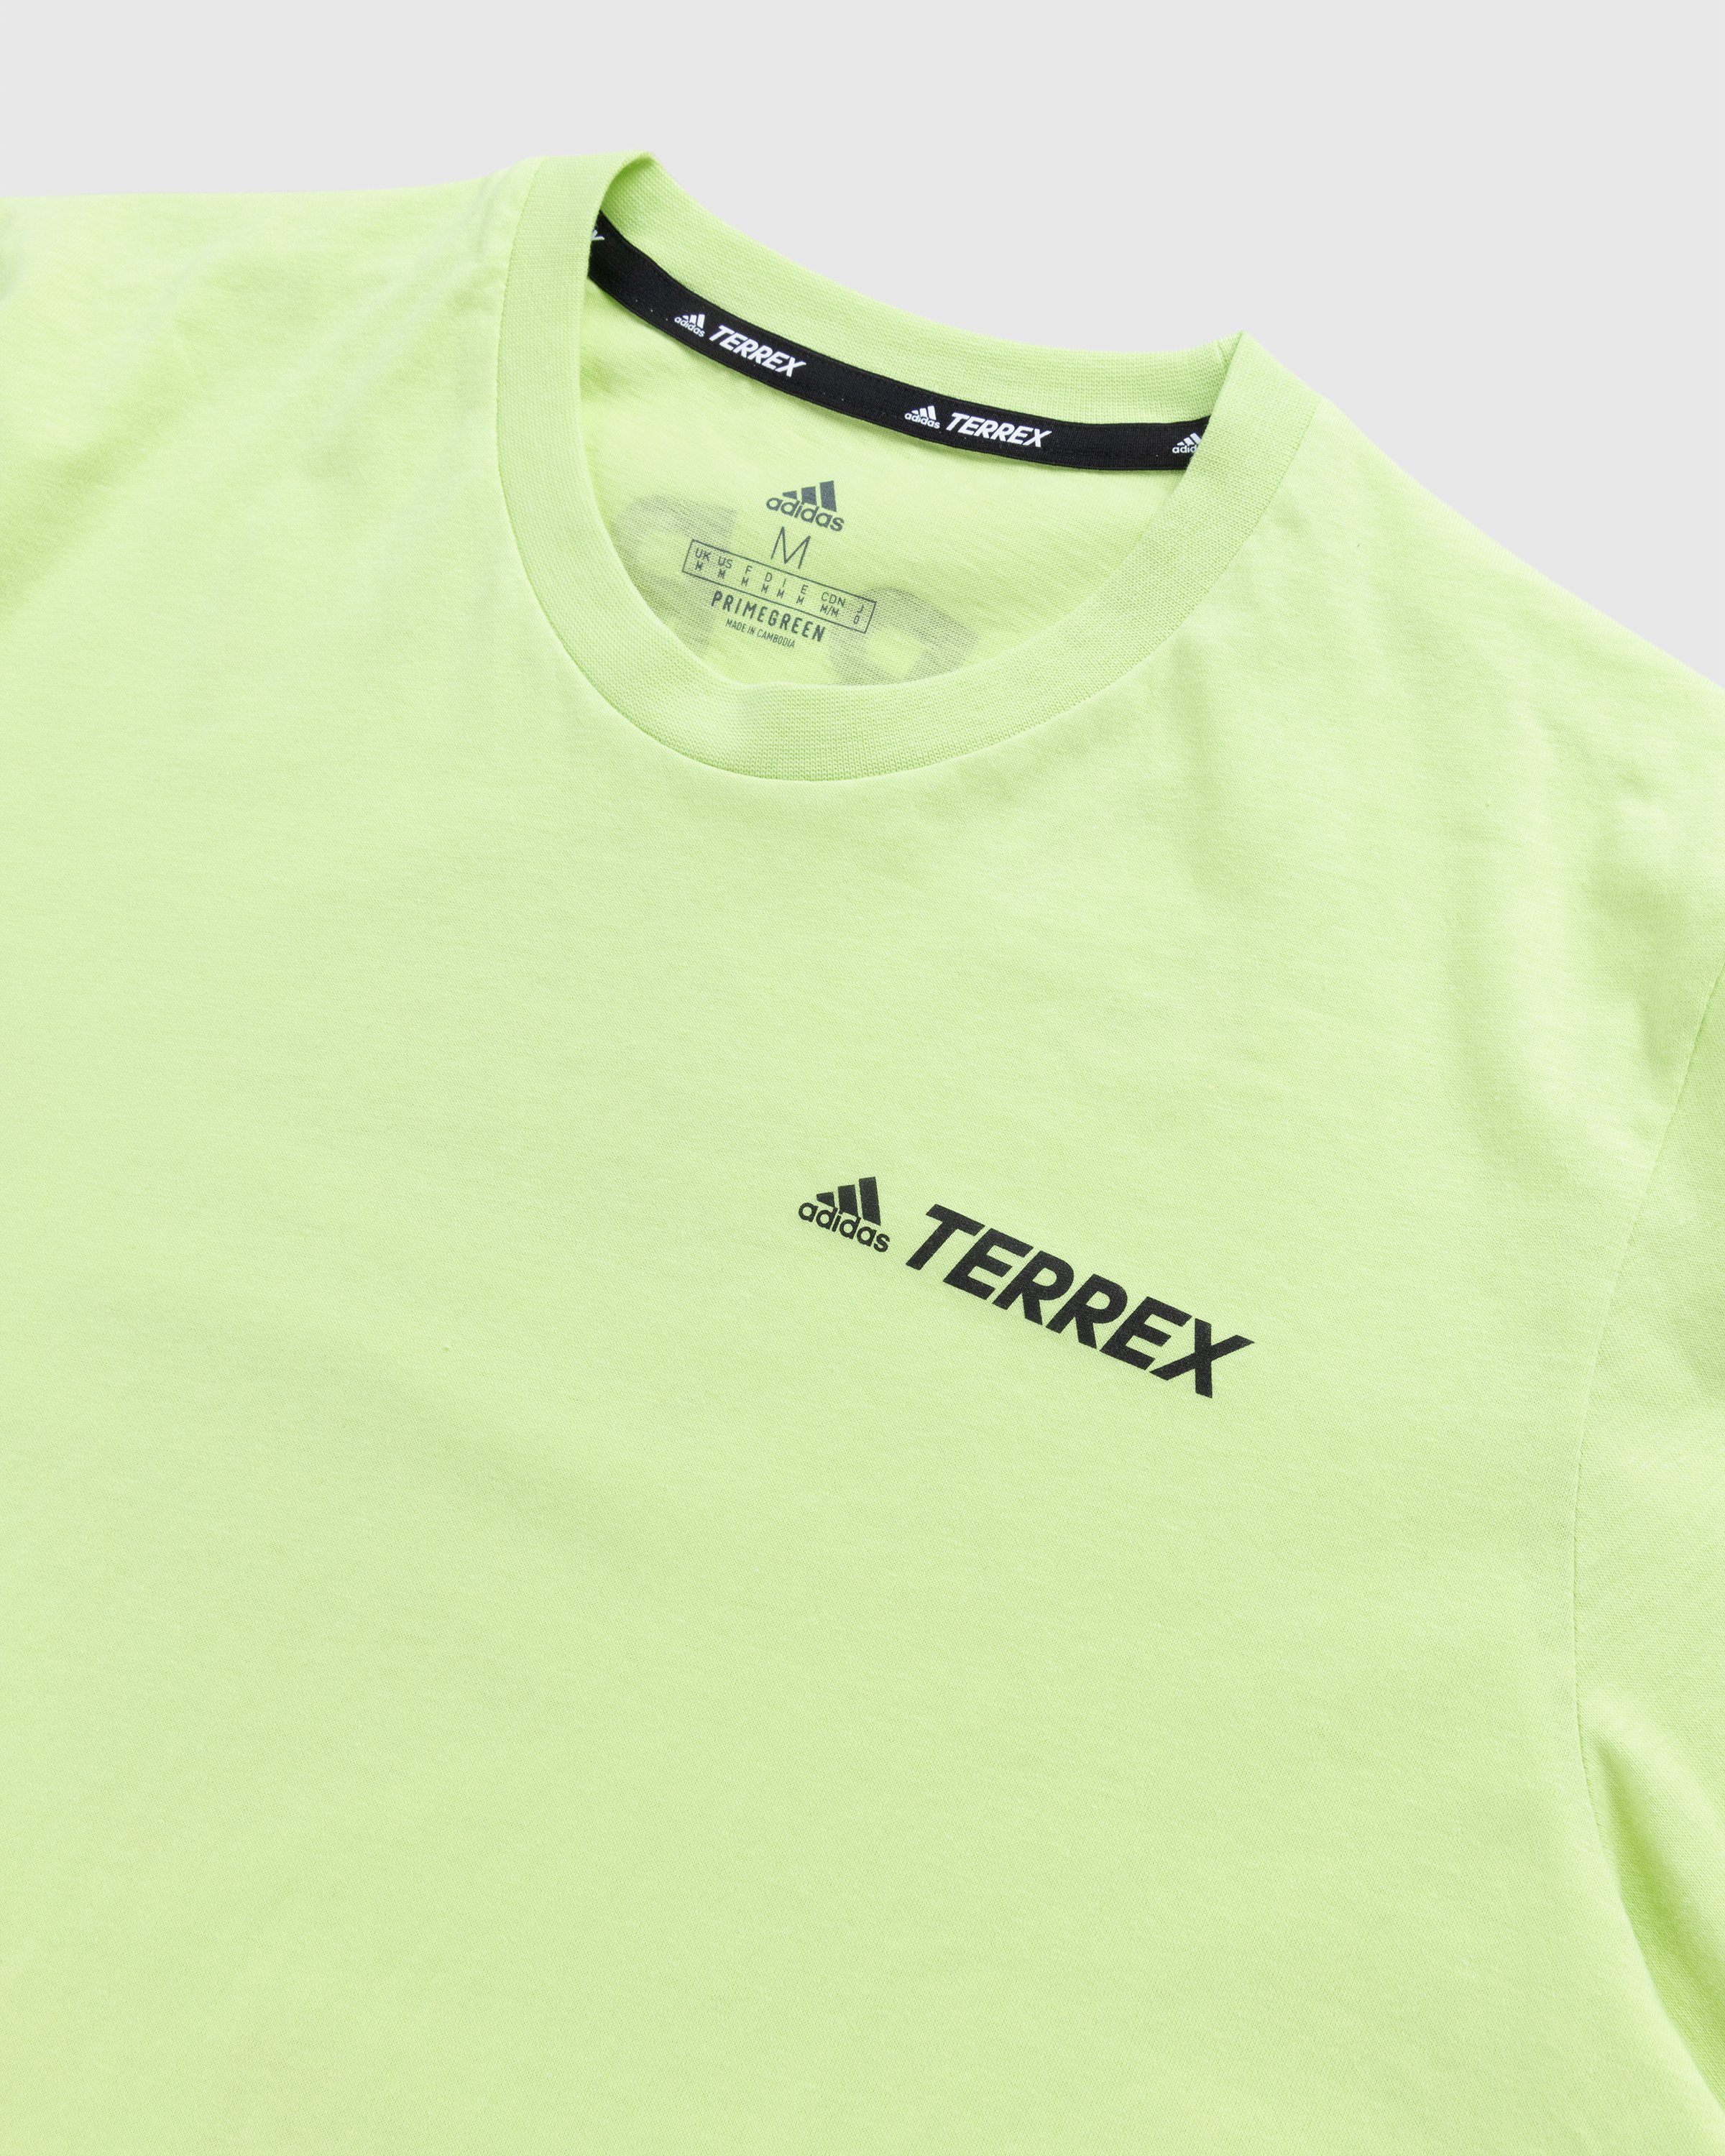 Adidas - Terrex Mountain Landscape T-Shirt Green - Clothing - Green - Image 3